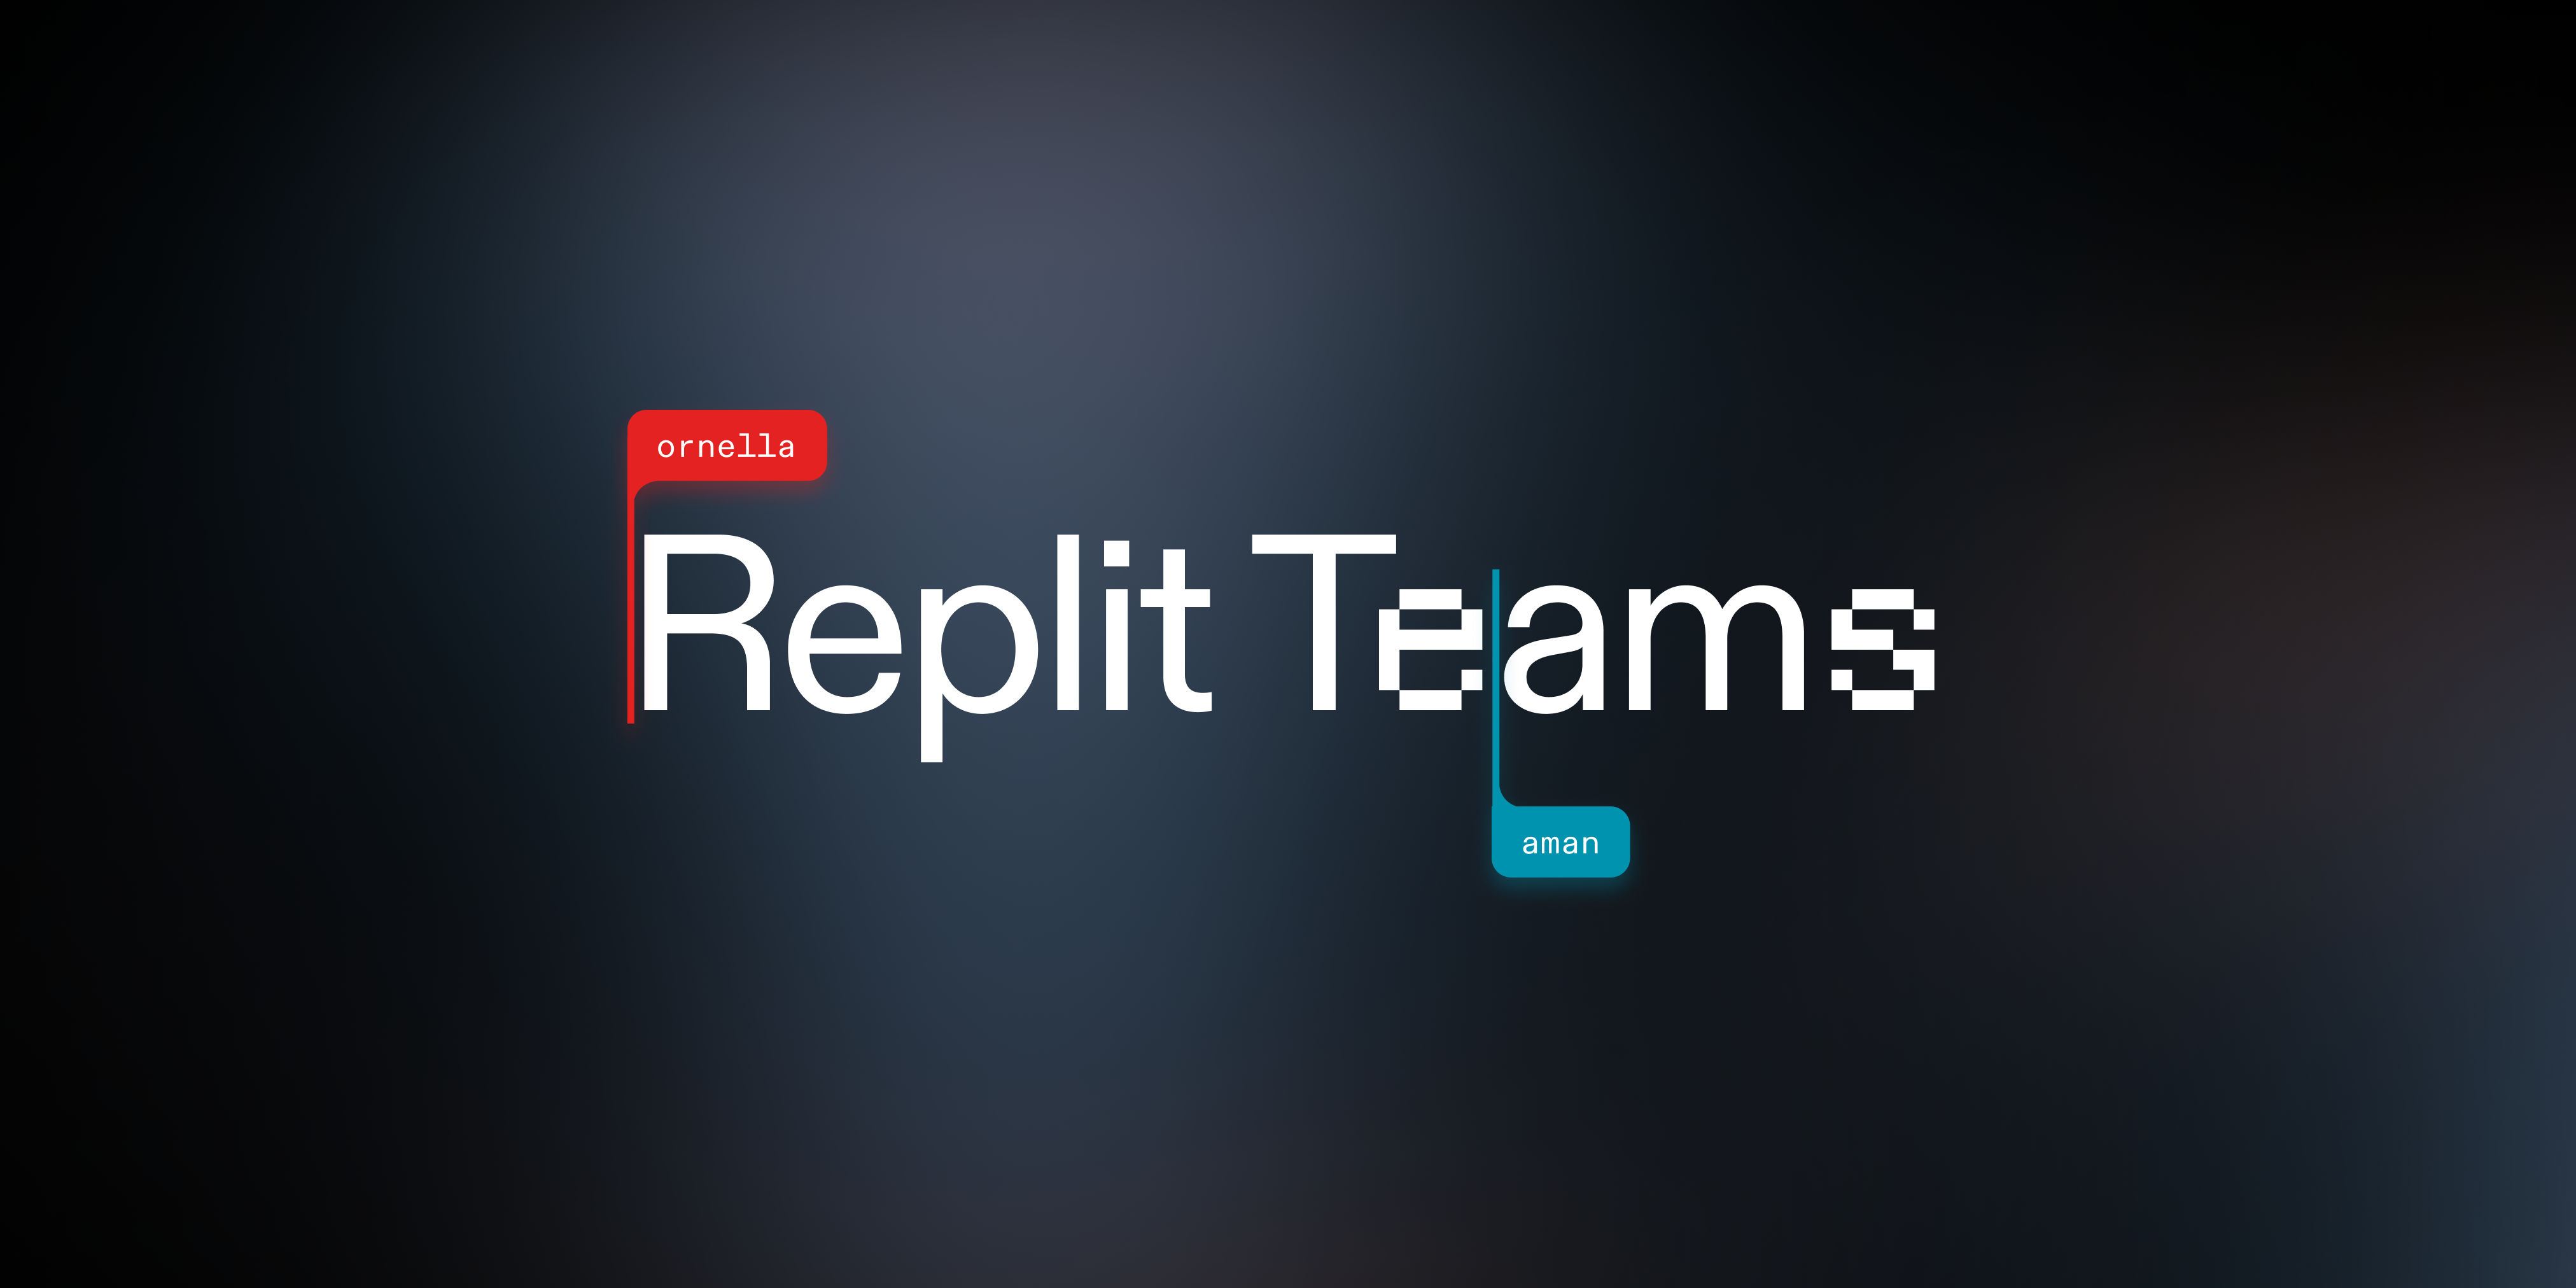 Replit Teams image